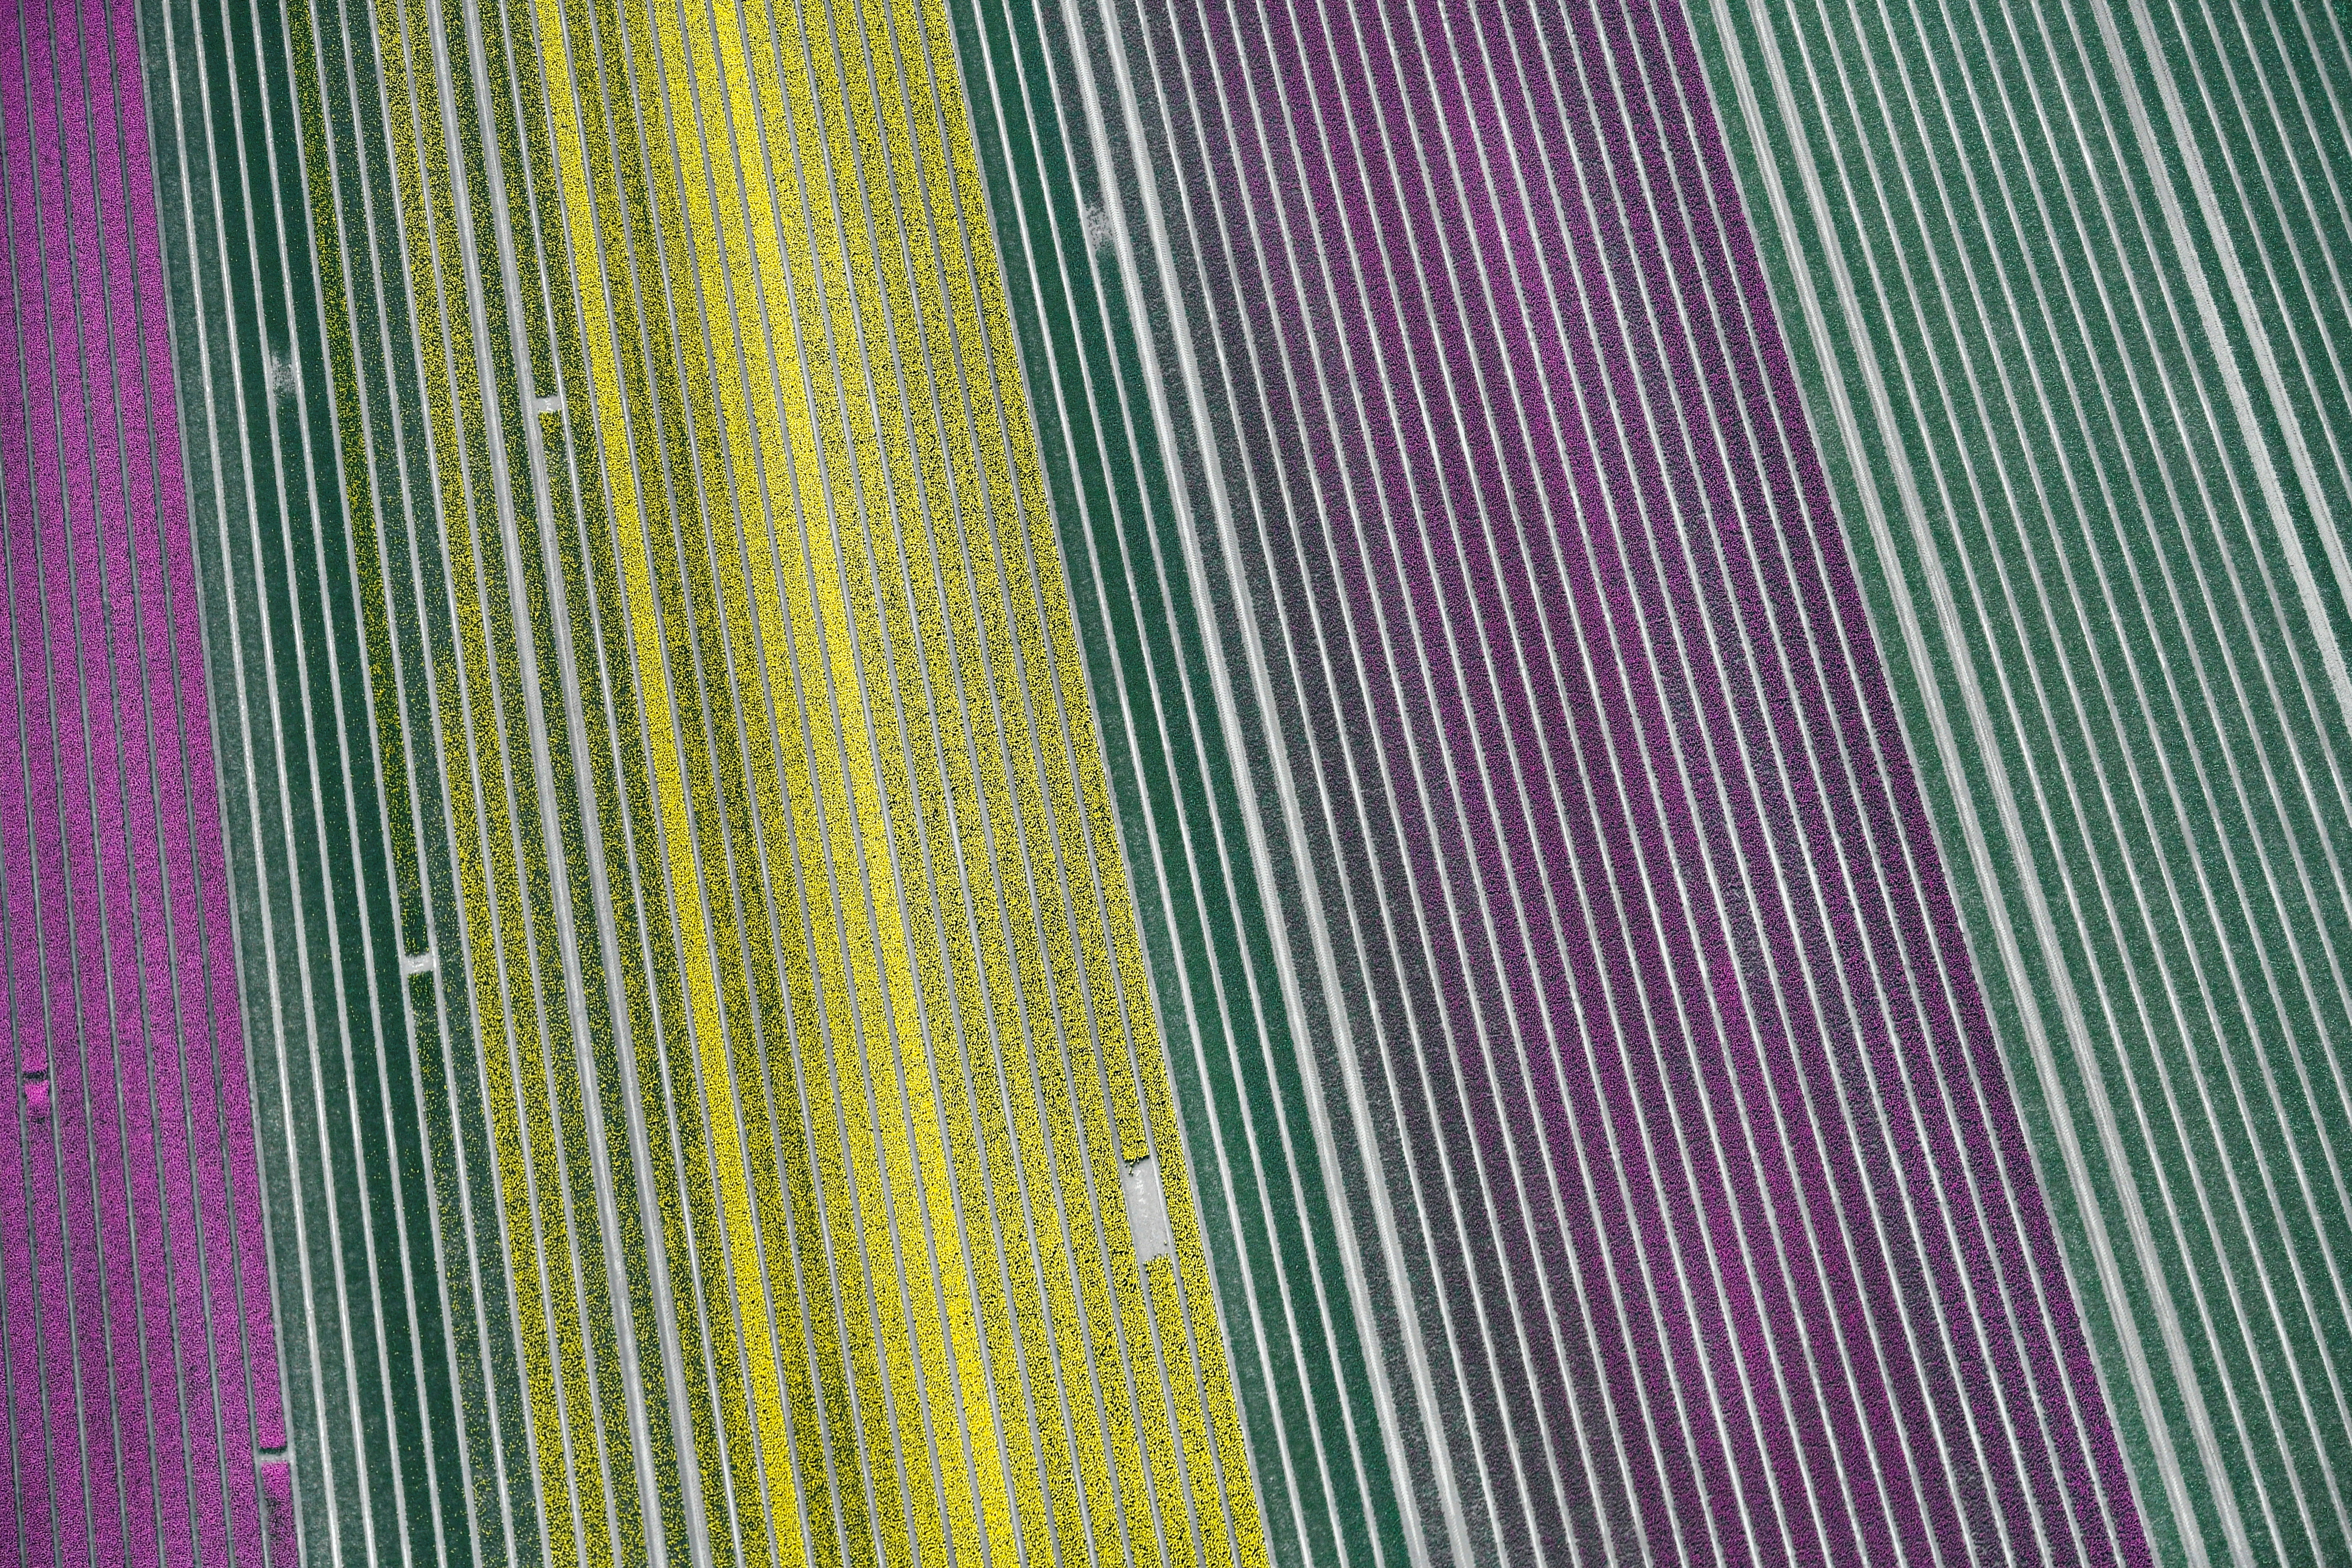 Aerial view of flower fields in Lisse